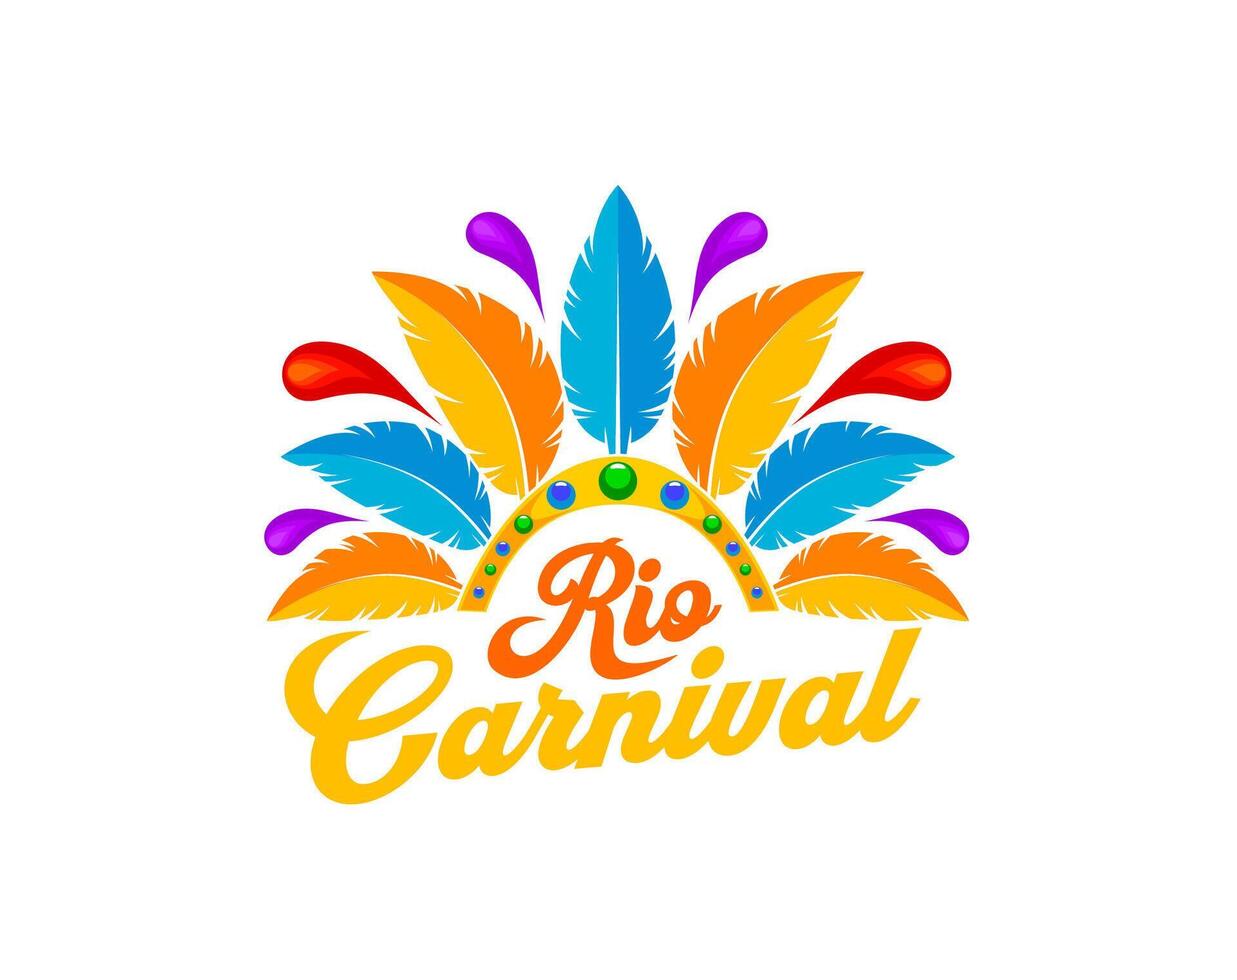 Brazilian Rio carnival party icon, color feathers vector